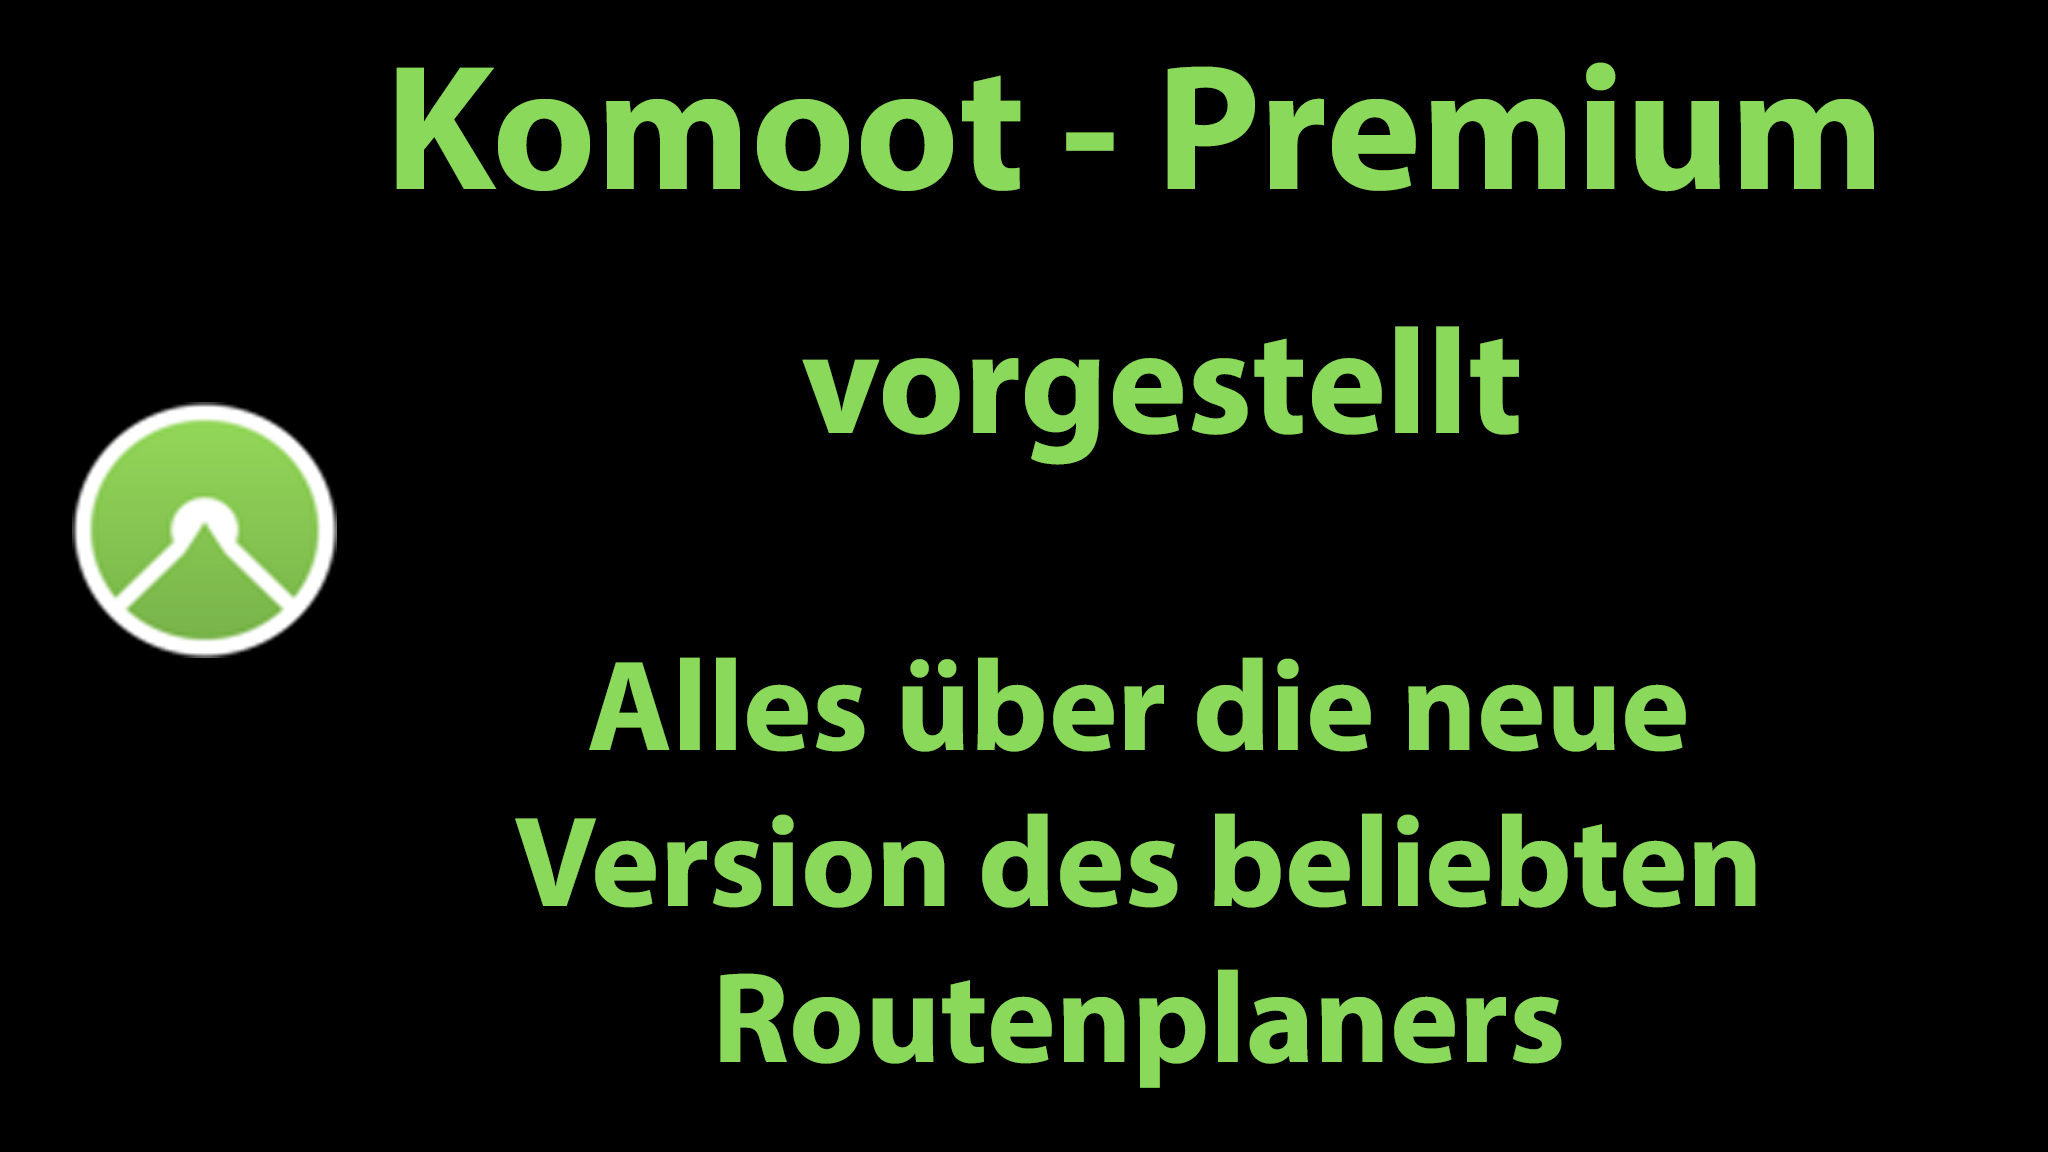 Komoot Premium